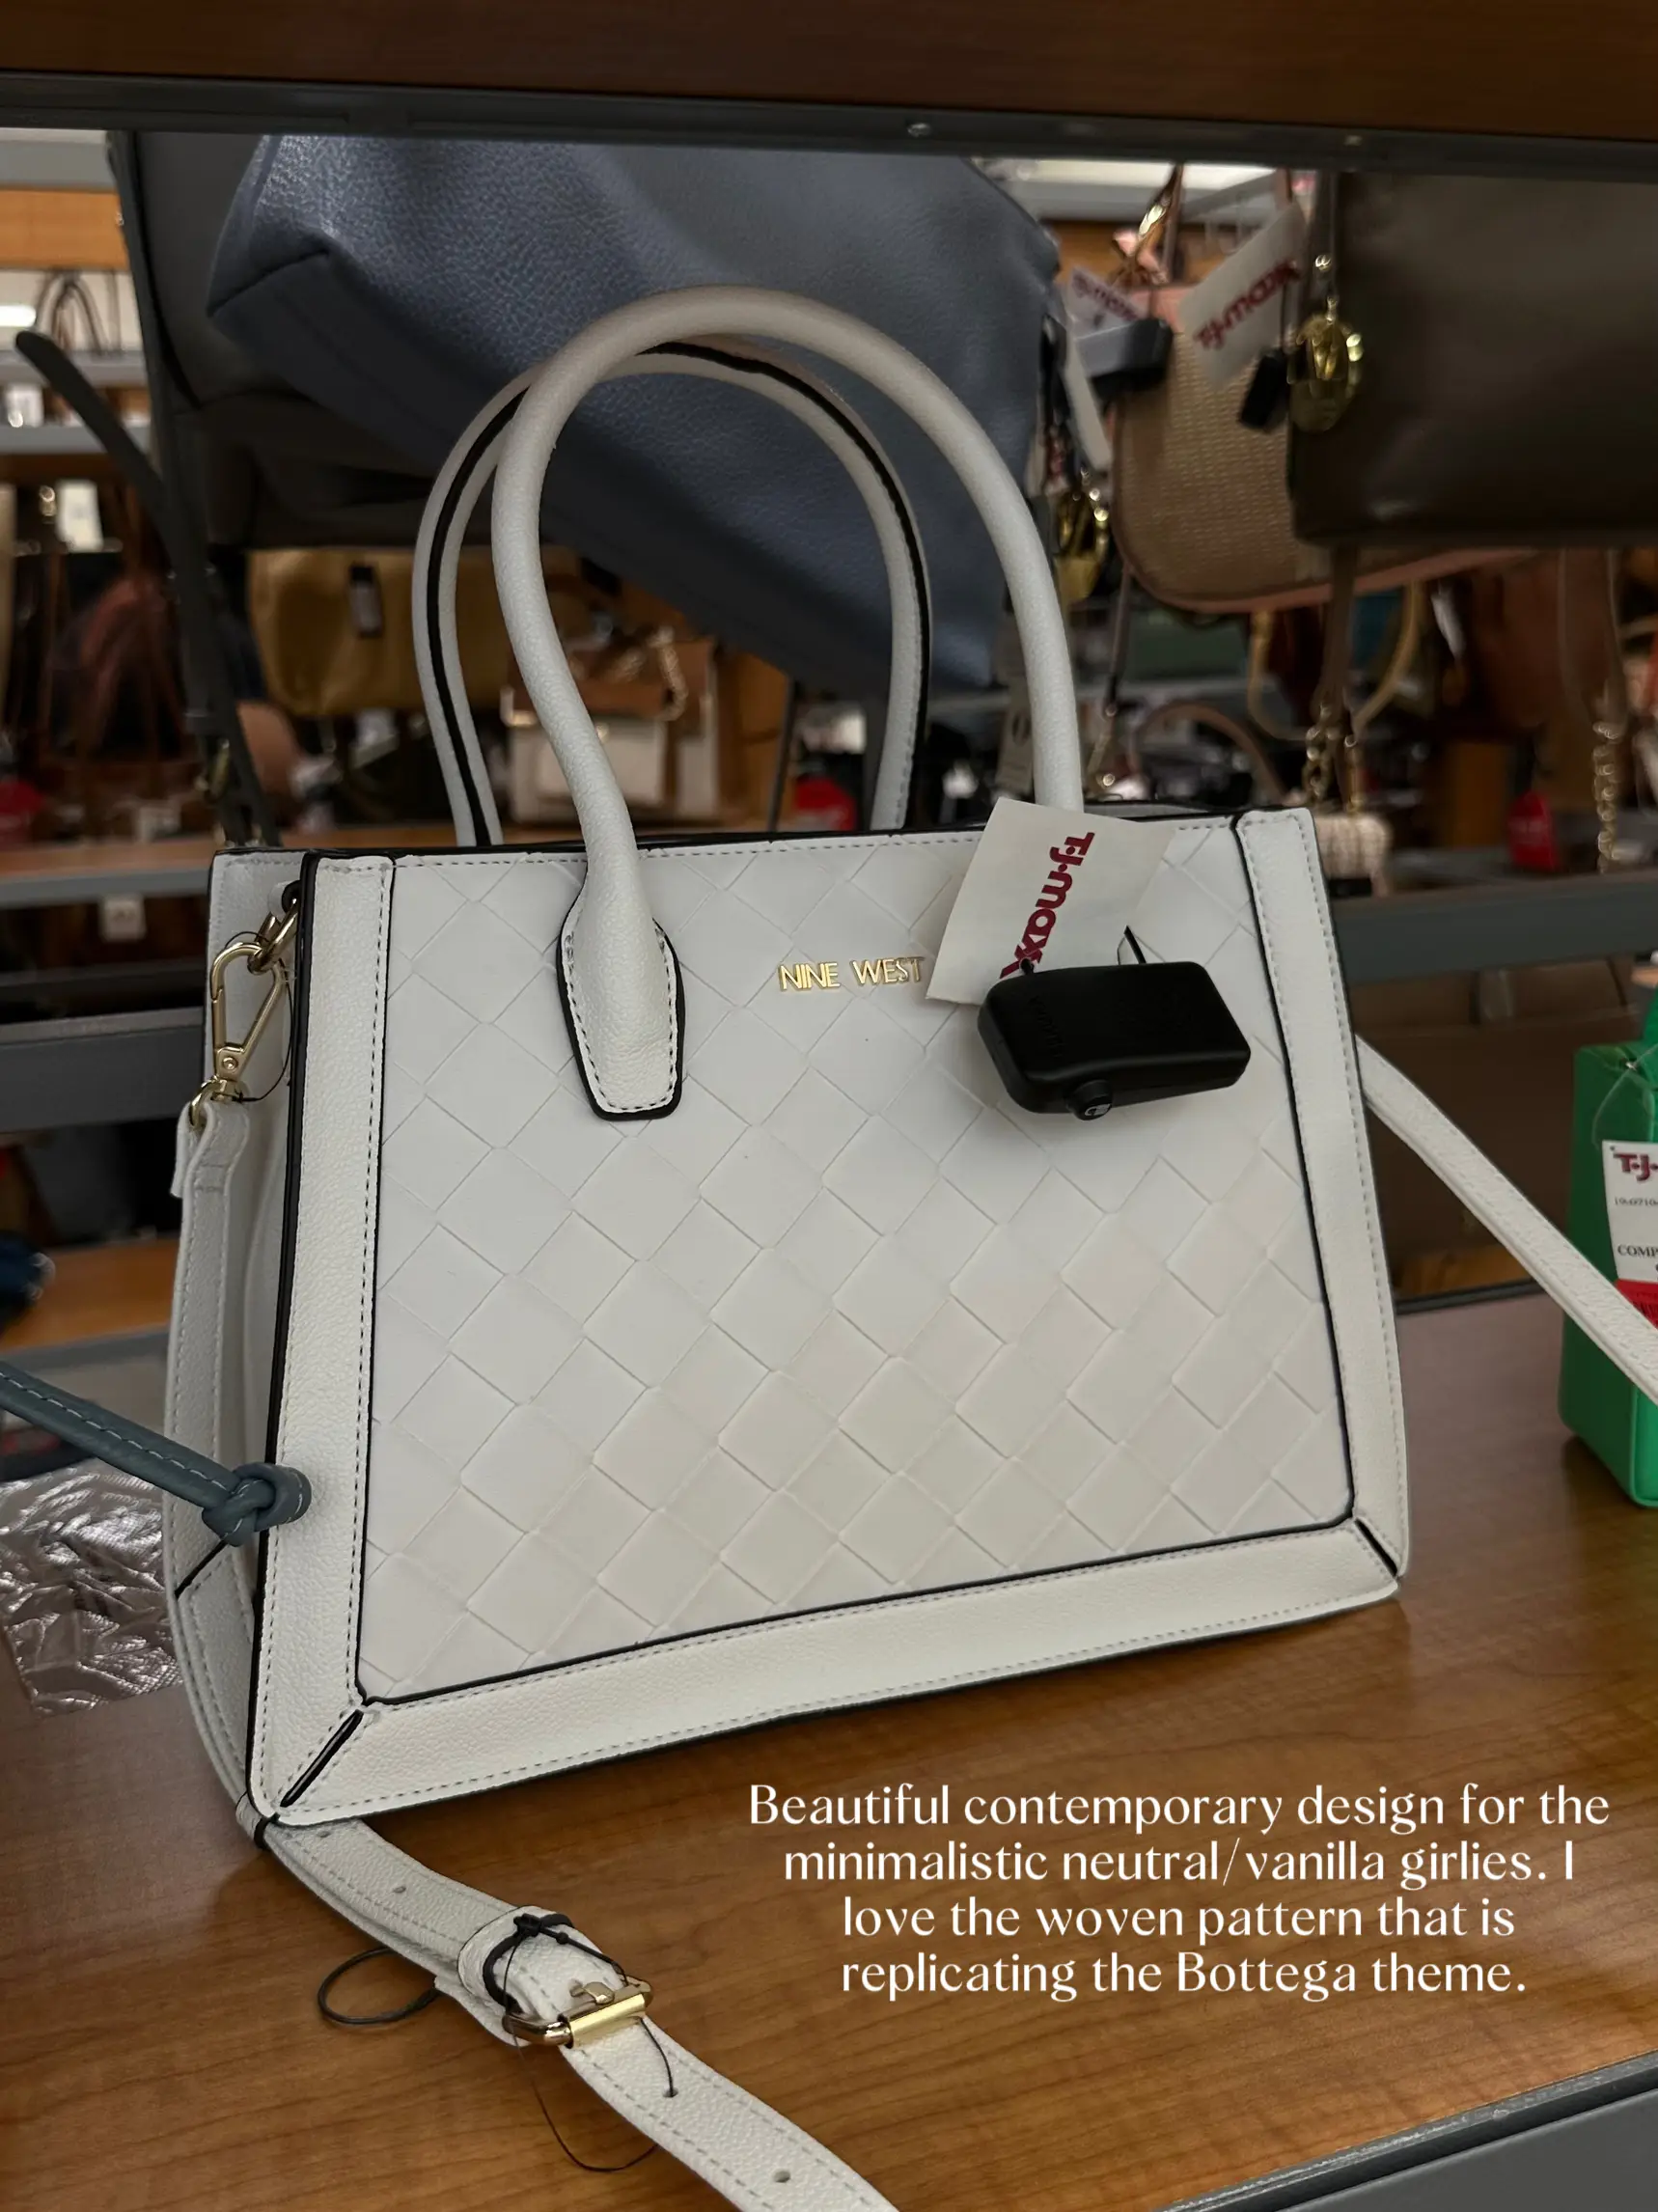 Can I trust bags from TJMaxx/Marshalls? : r/handbags